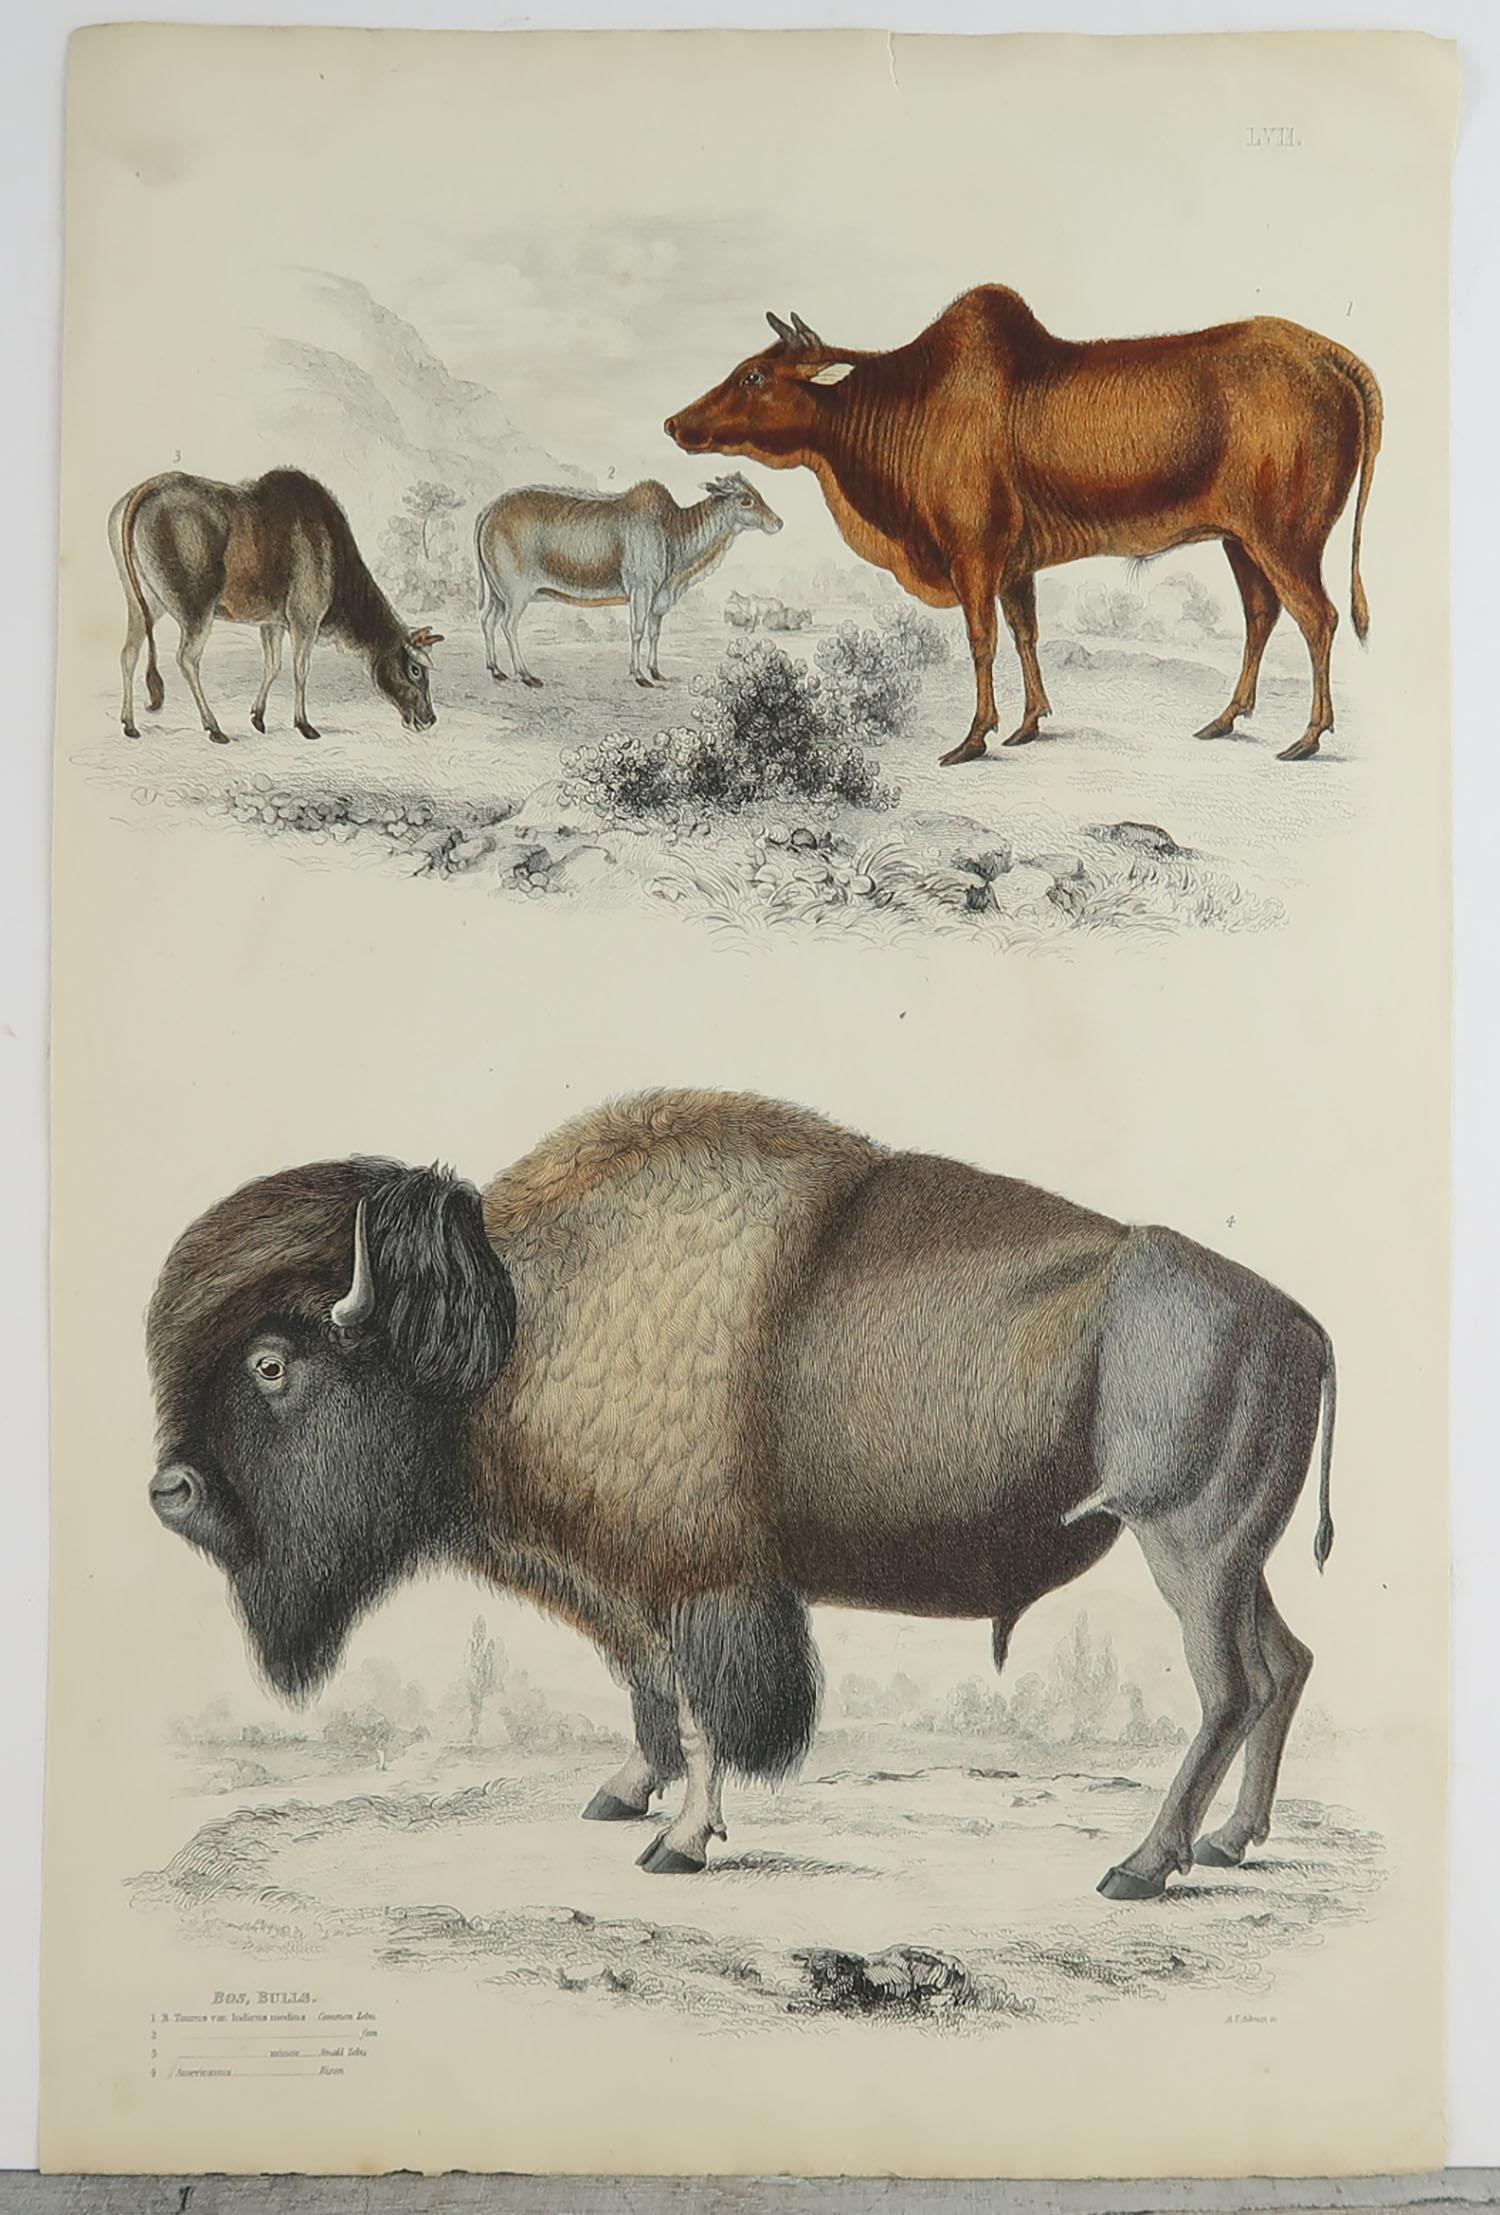 Folk Art Large Original Antique Natural History Print, American Bison, circa 1835